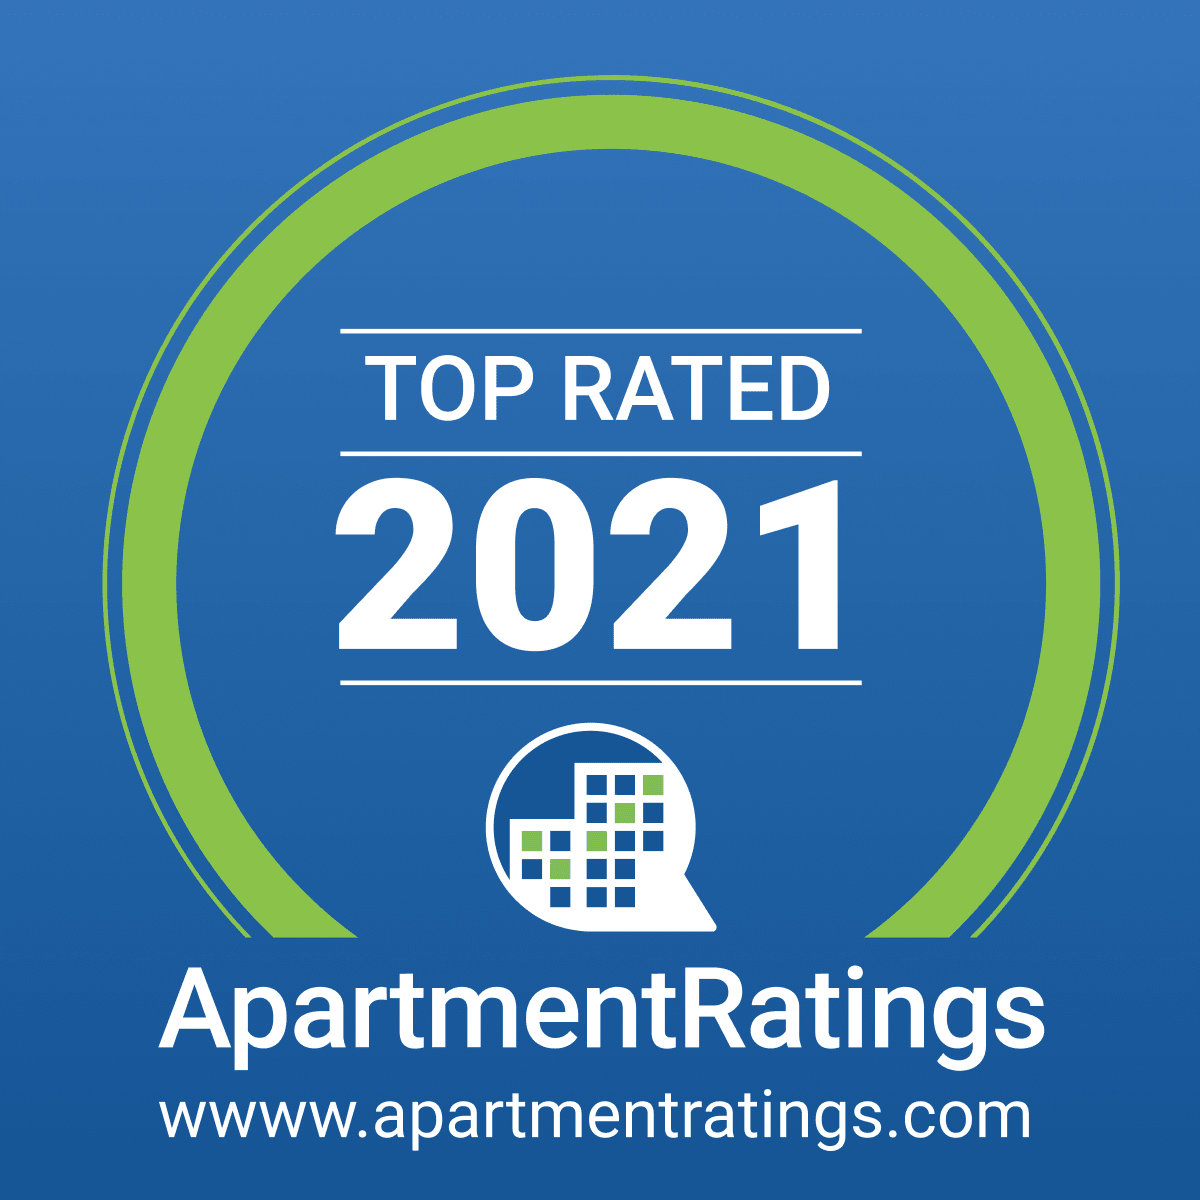 Apartment Ratings award